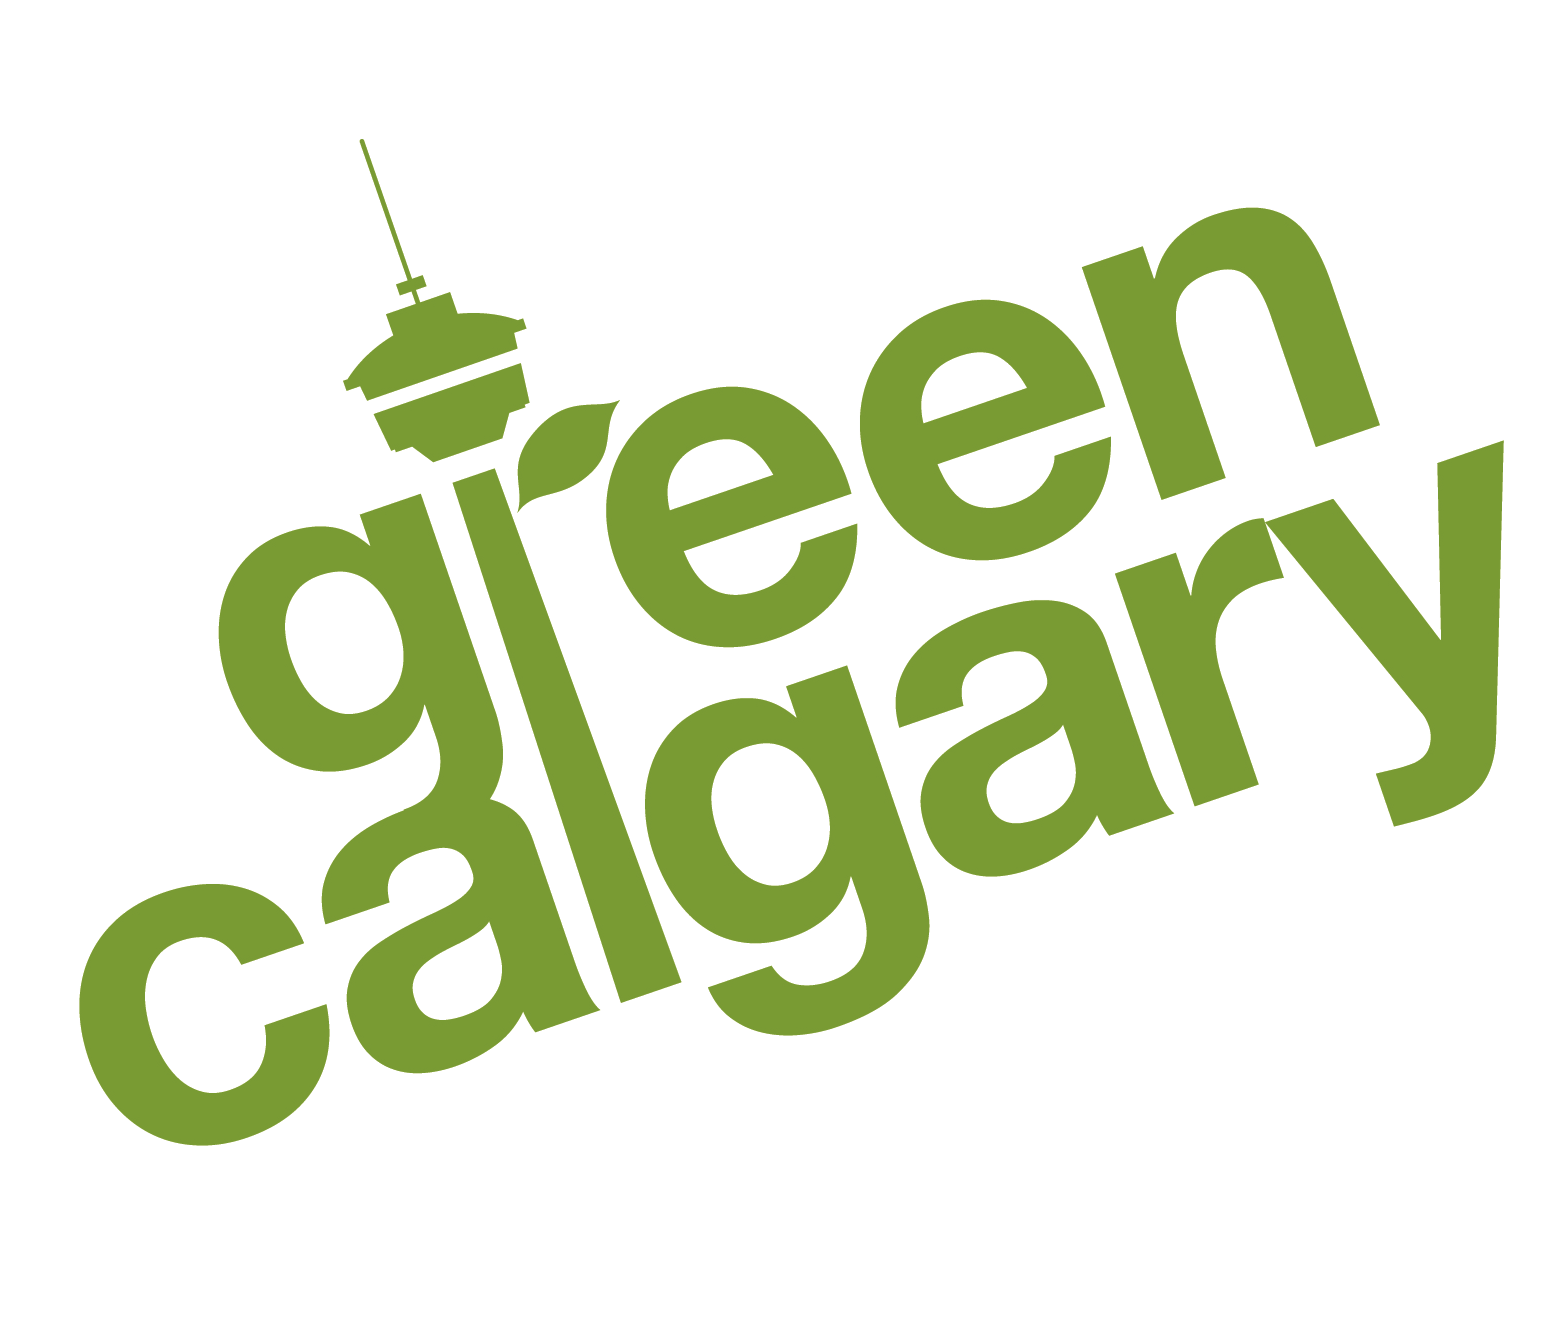 Green Calgary